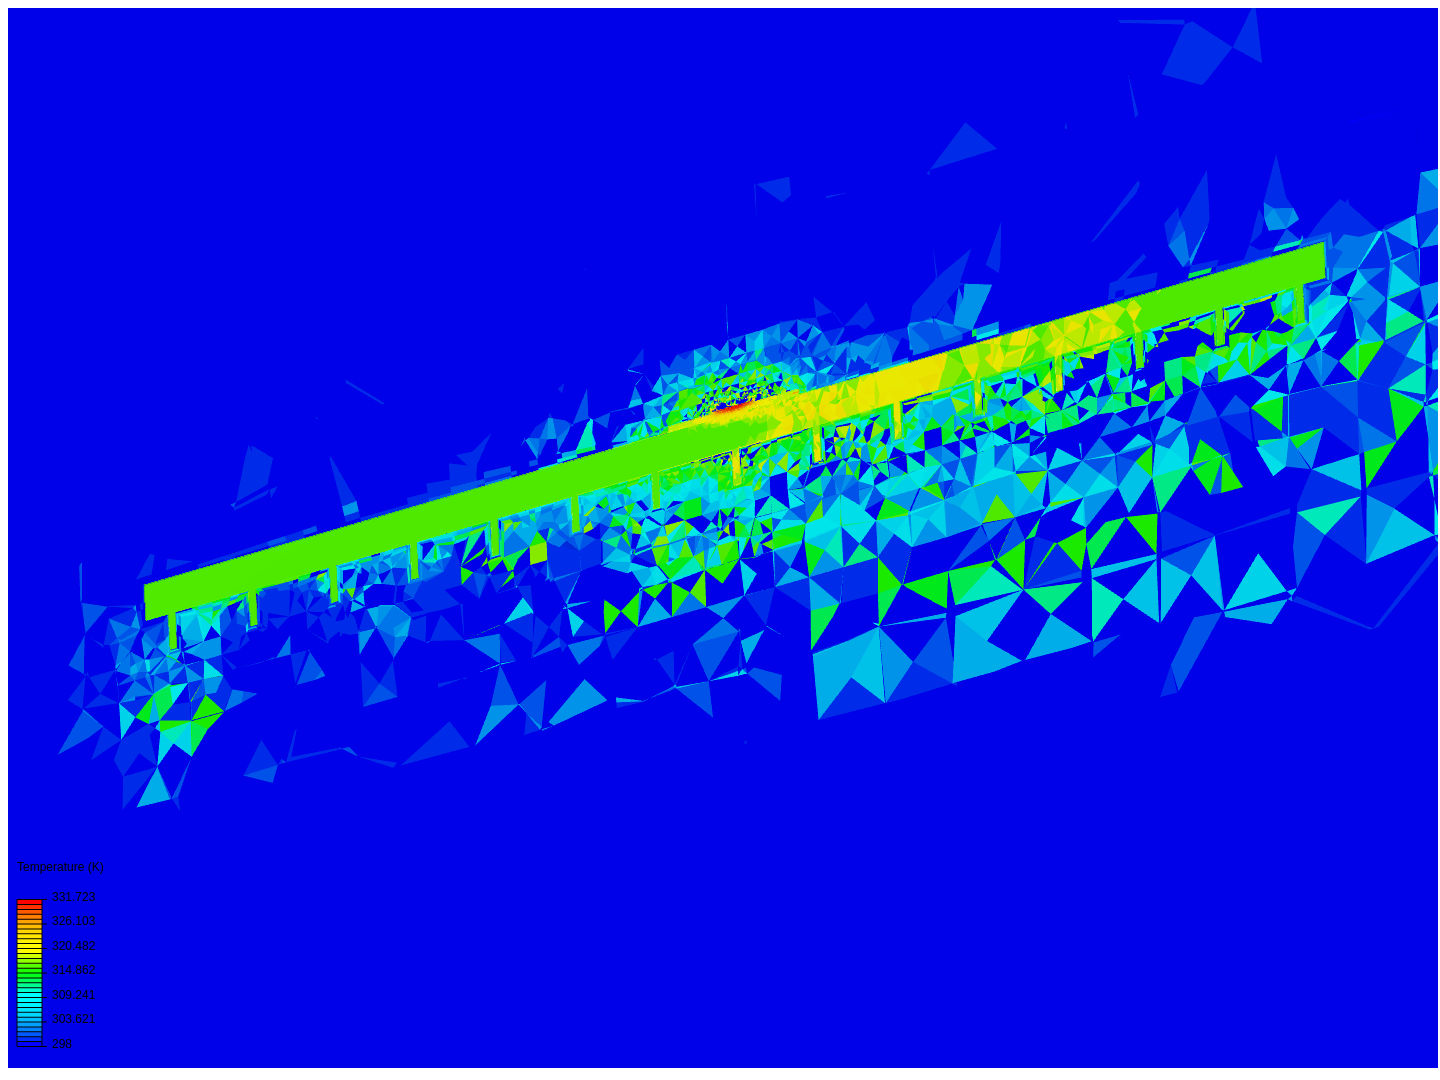 Heat sink simulation flat plane image